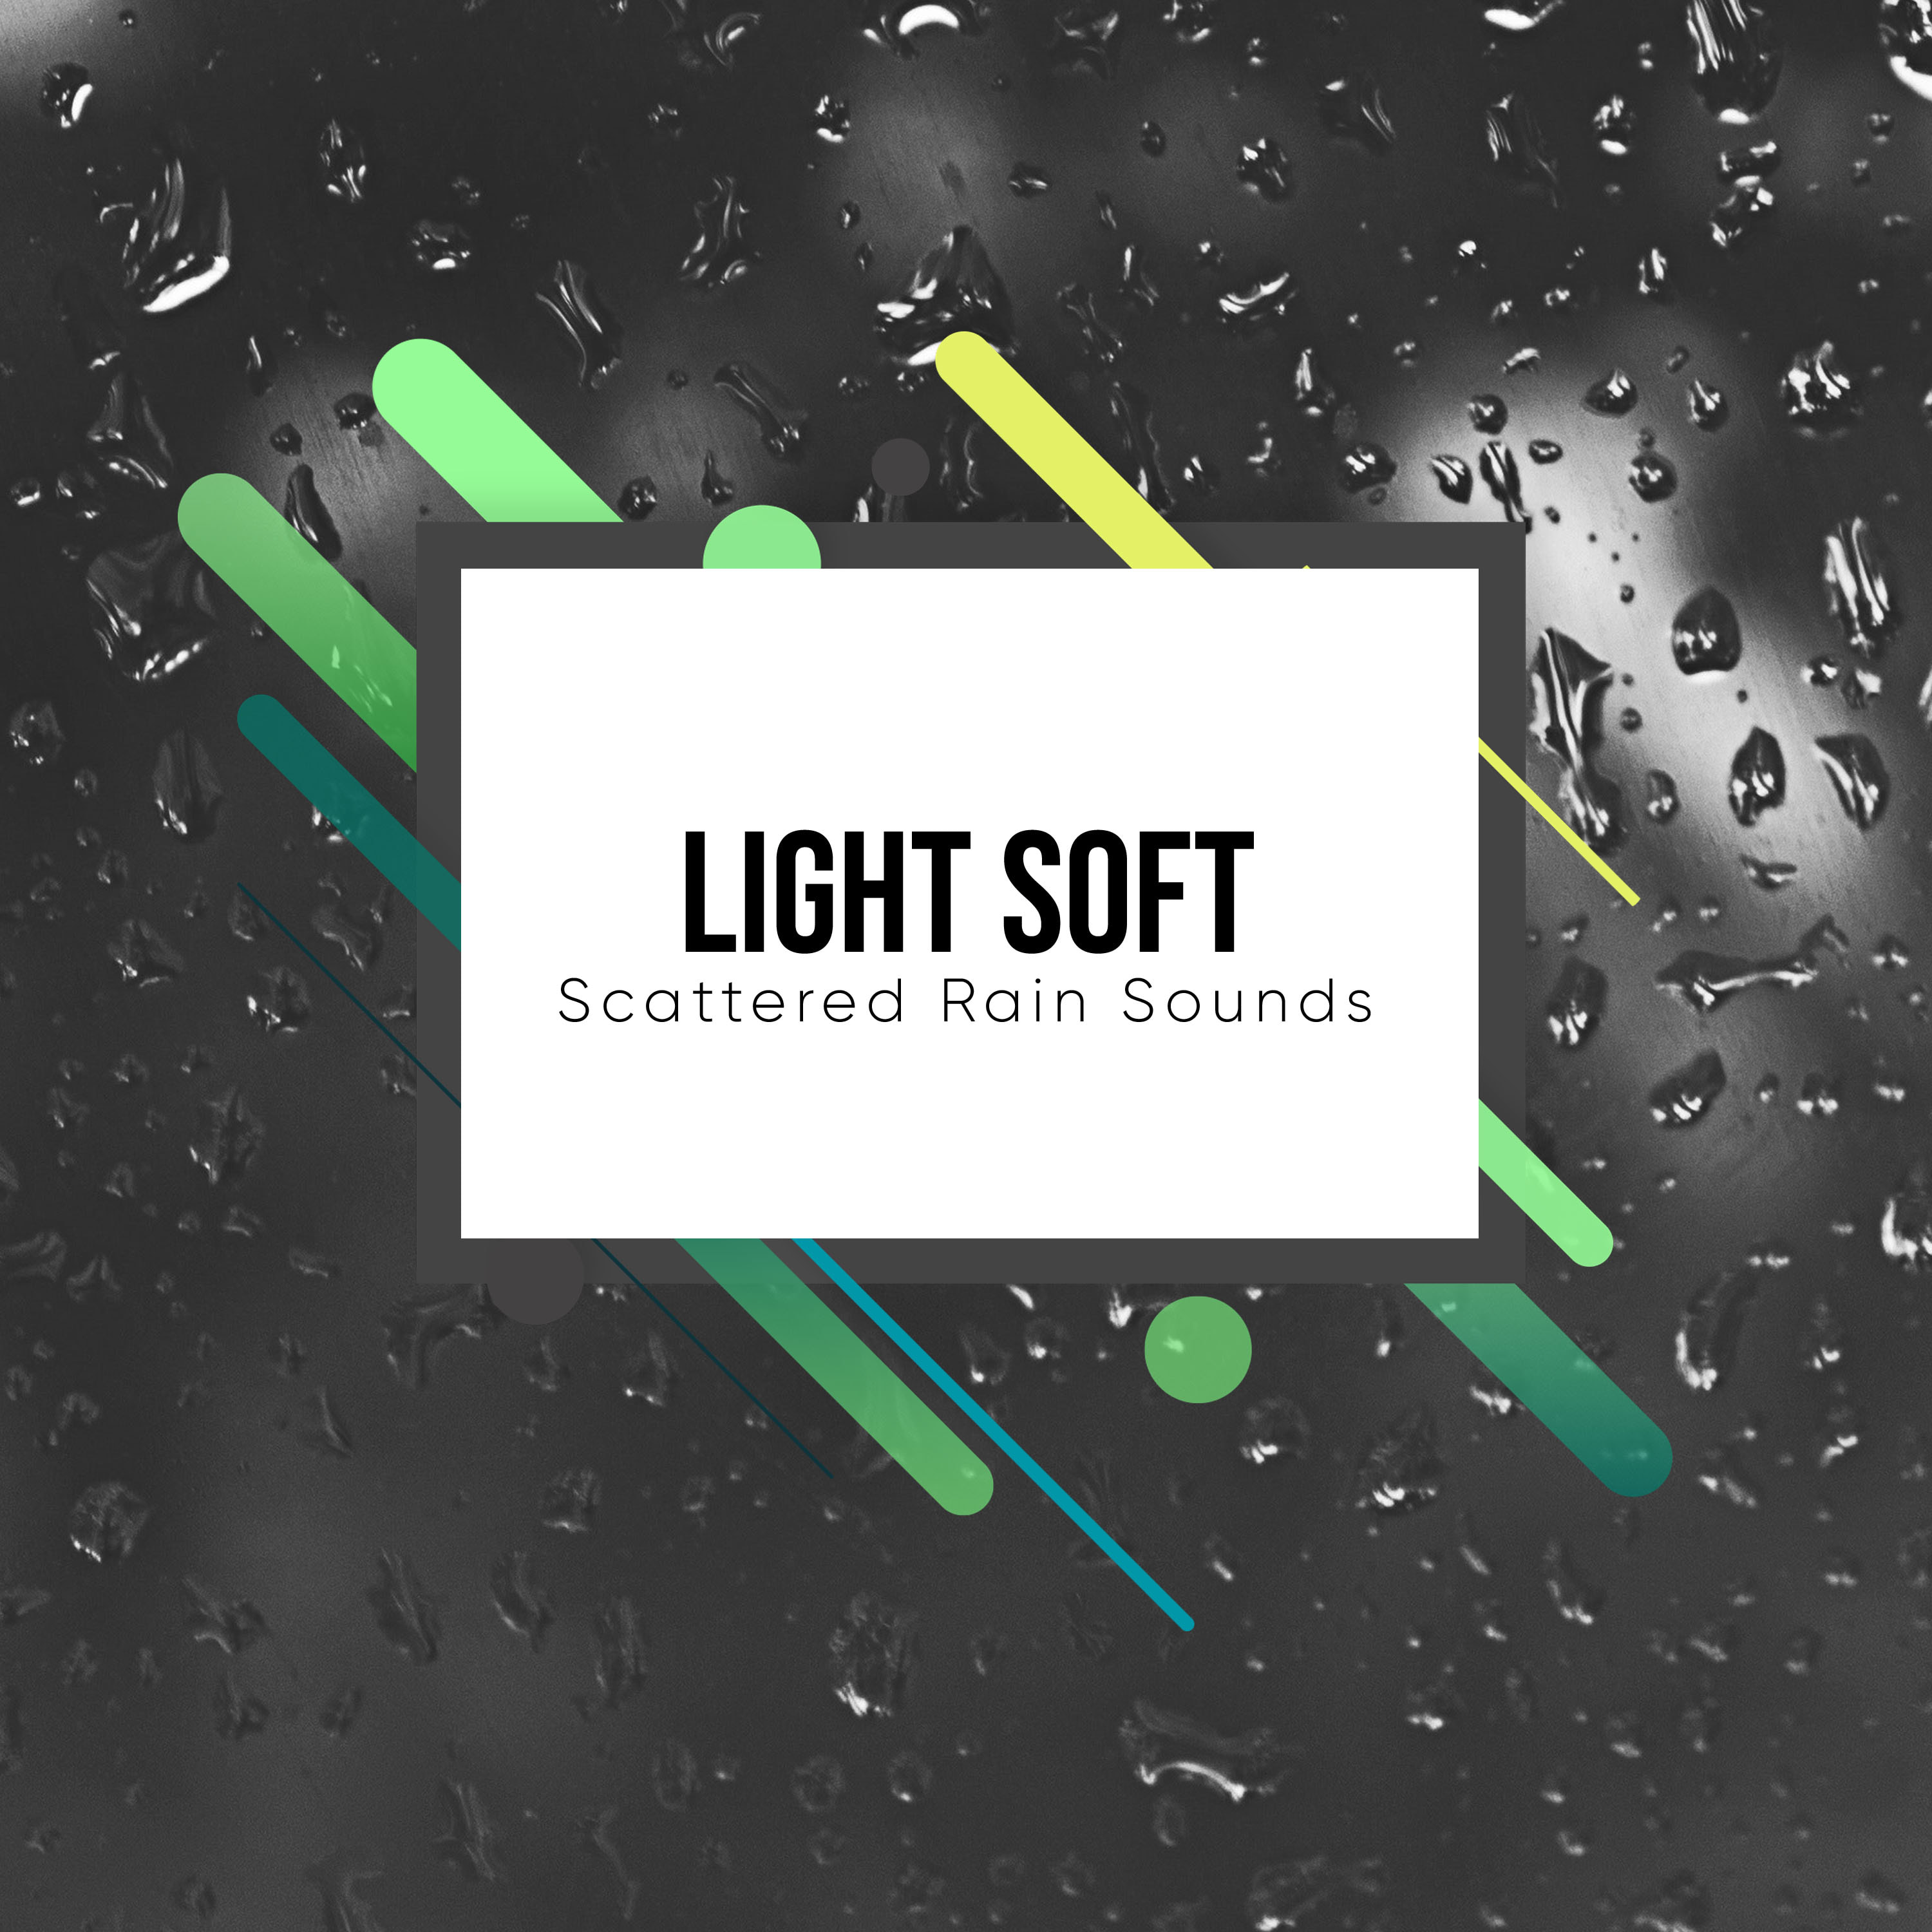 #11 Light Soft Scattered Rain Sounds